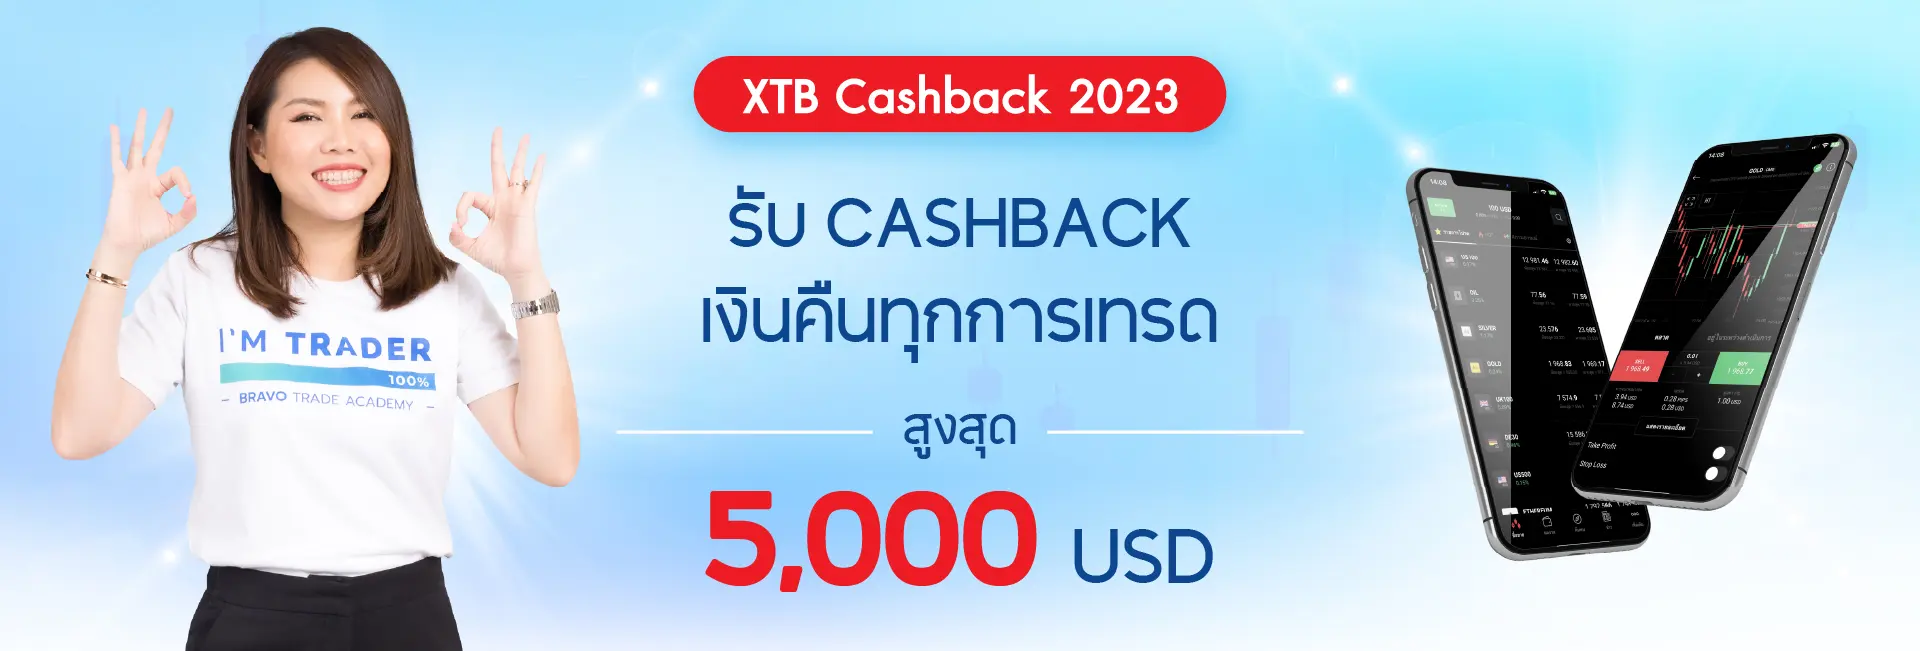 XTB cashback 2023 รับเงินคืนสูงสุด 5000 USD